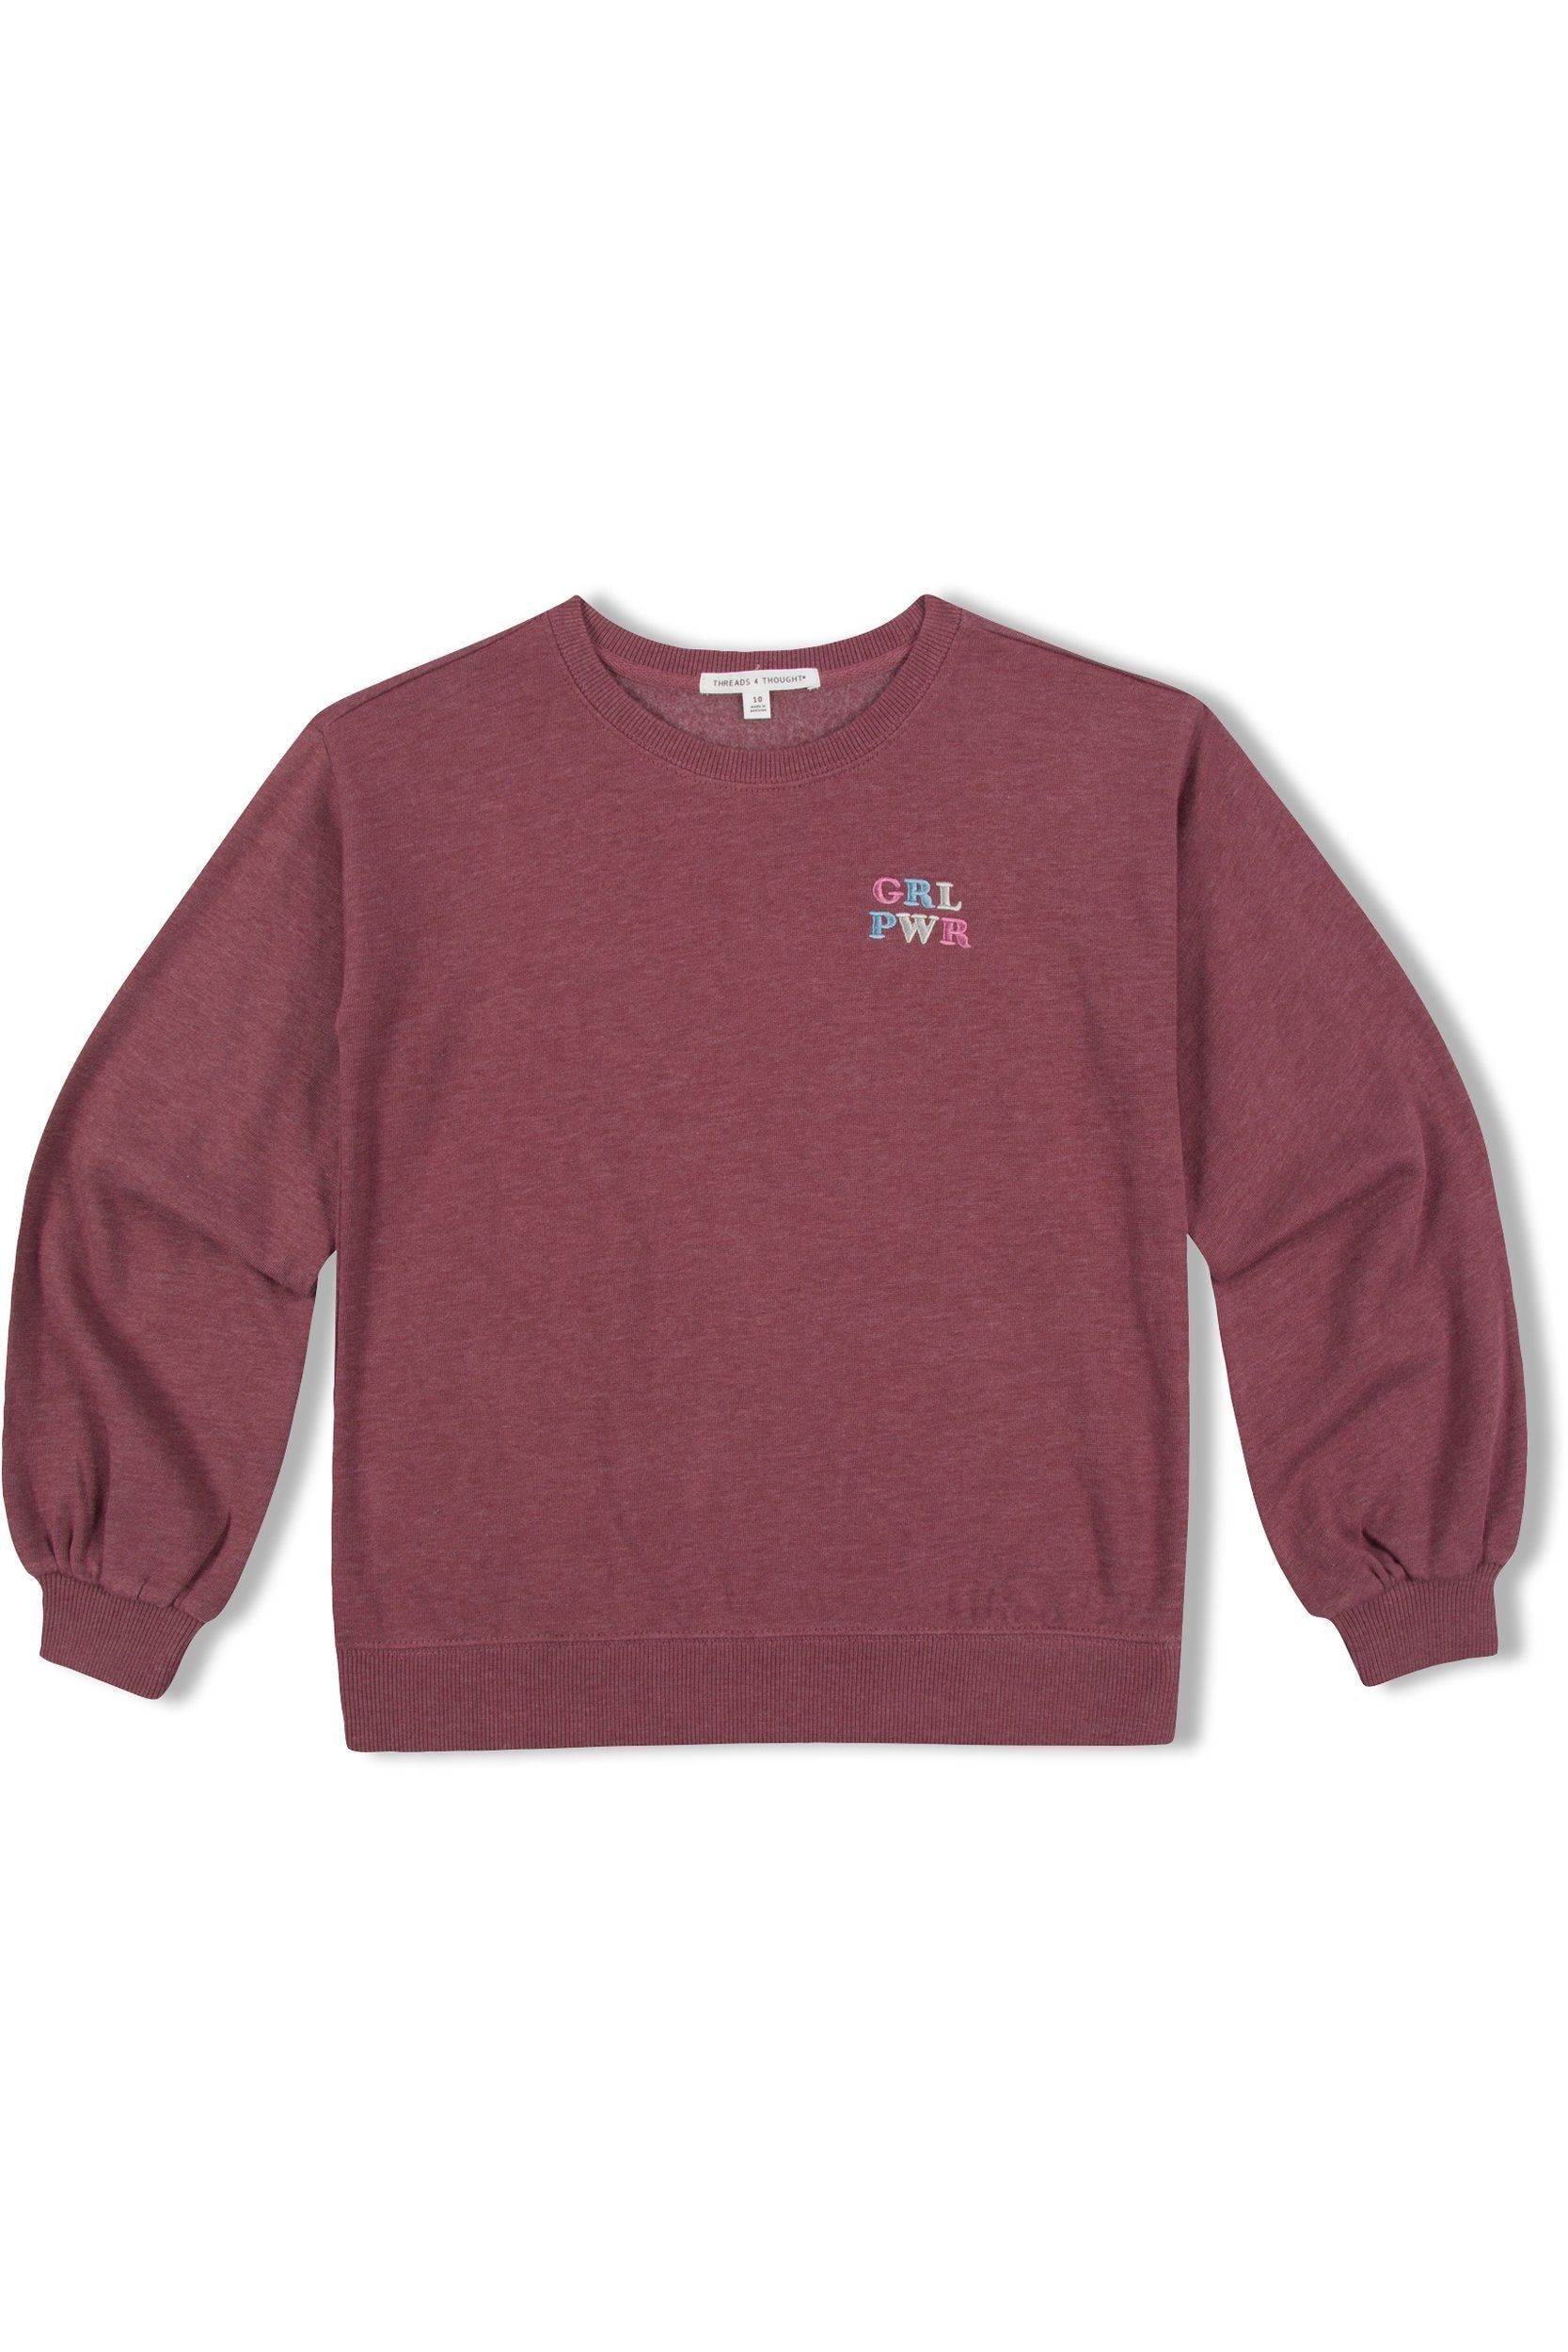 Little Girl’s Samira Girl Power Embroidered Sweatshirt Girls Outerwear Sweatshirts Threads 4 Thought 